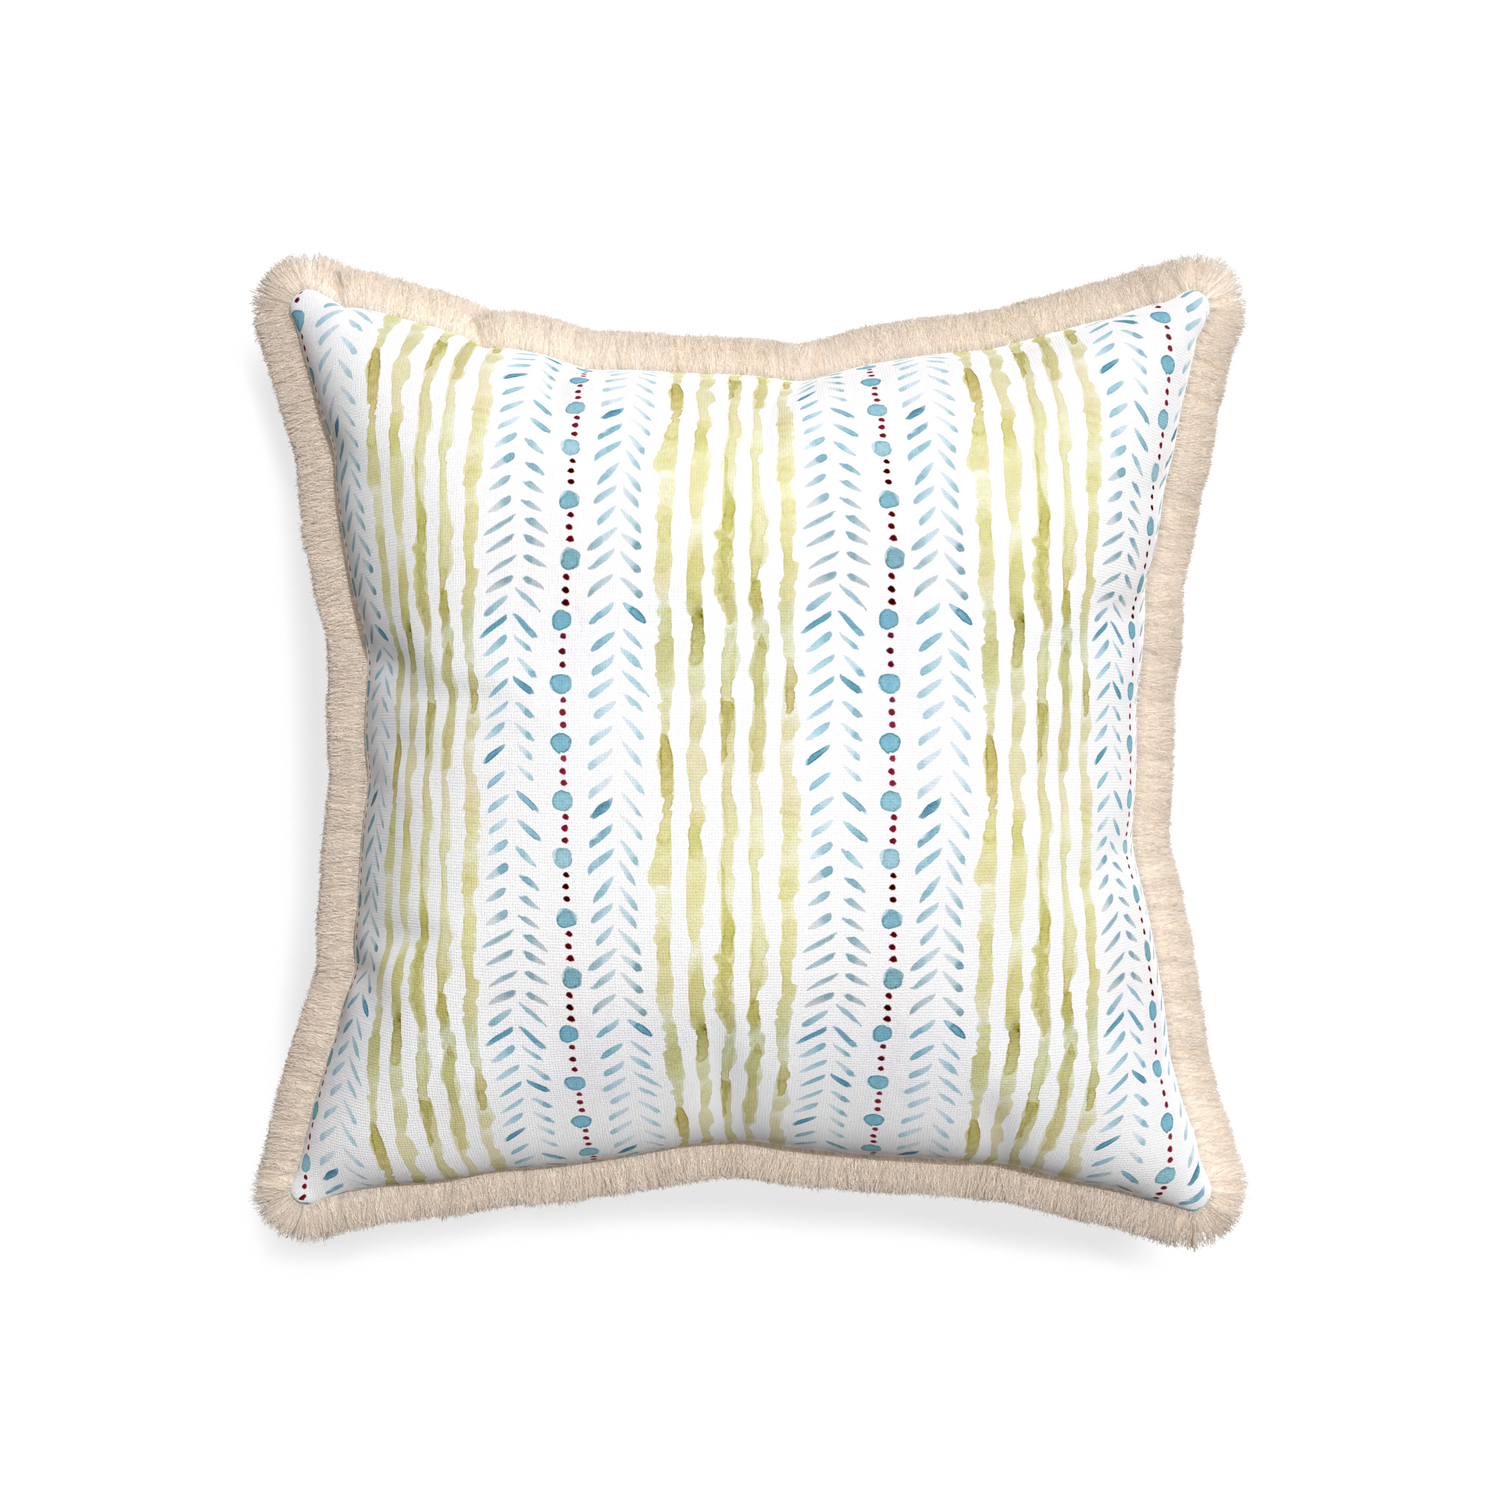 20-square julia custom pillow with cream fringe on white background